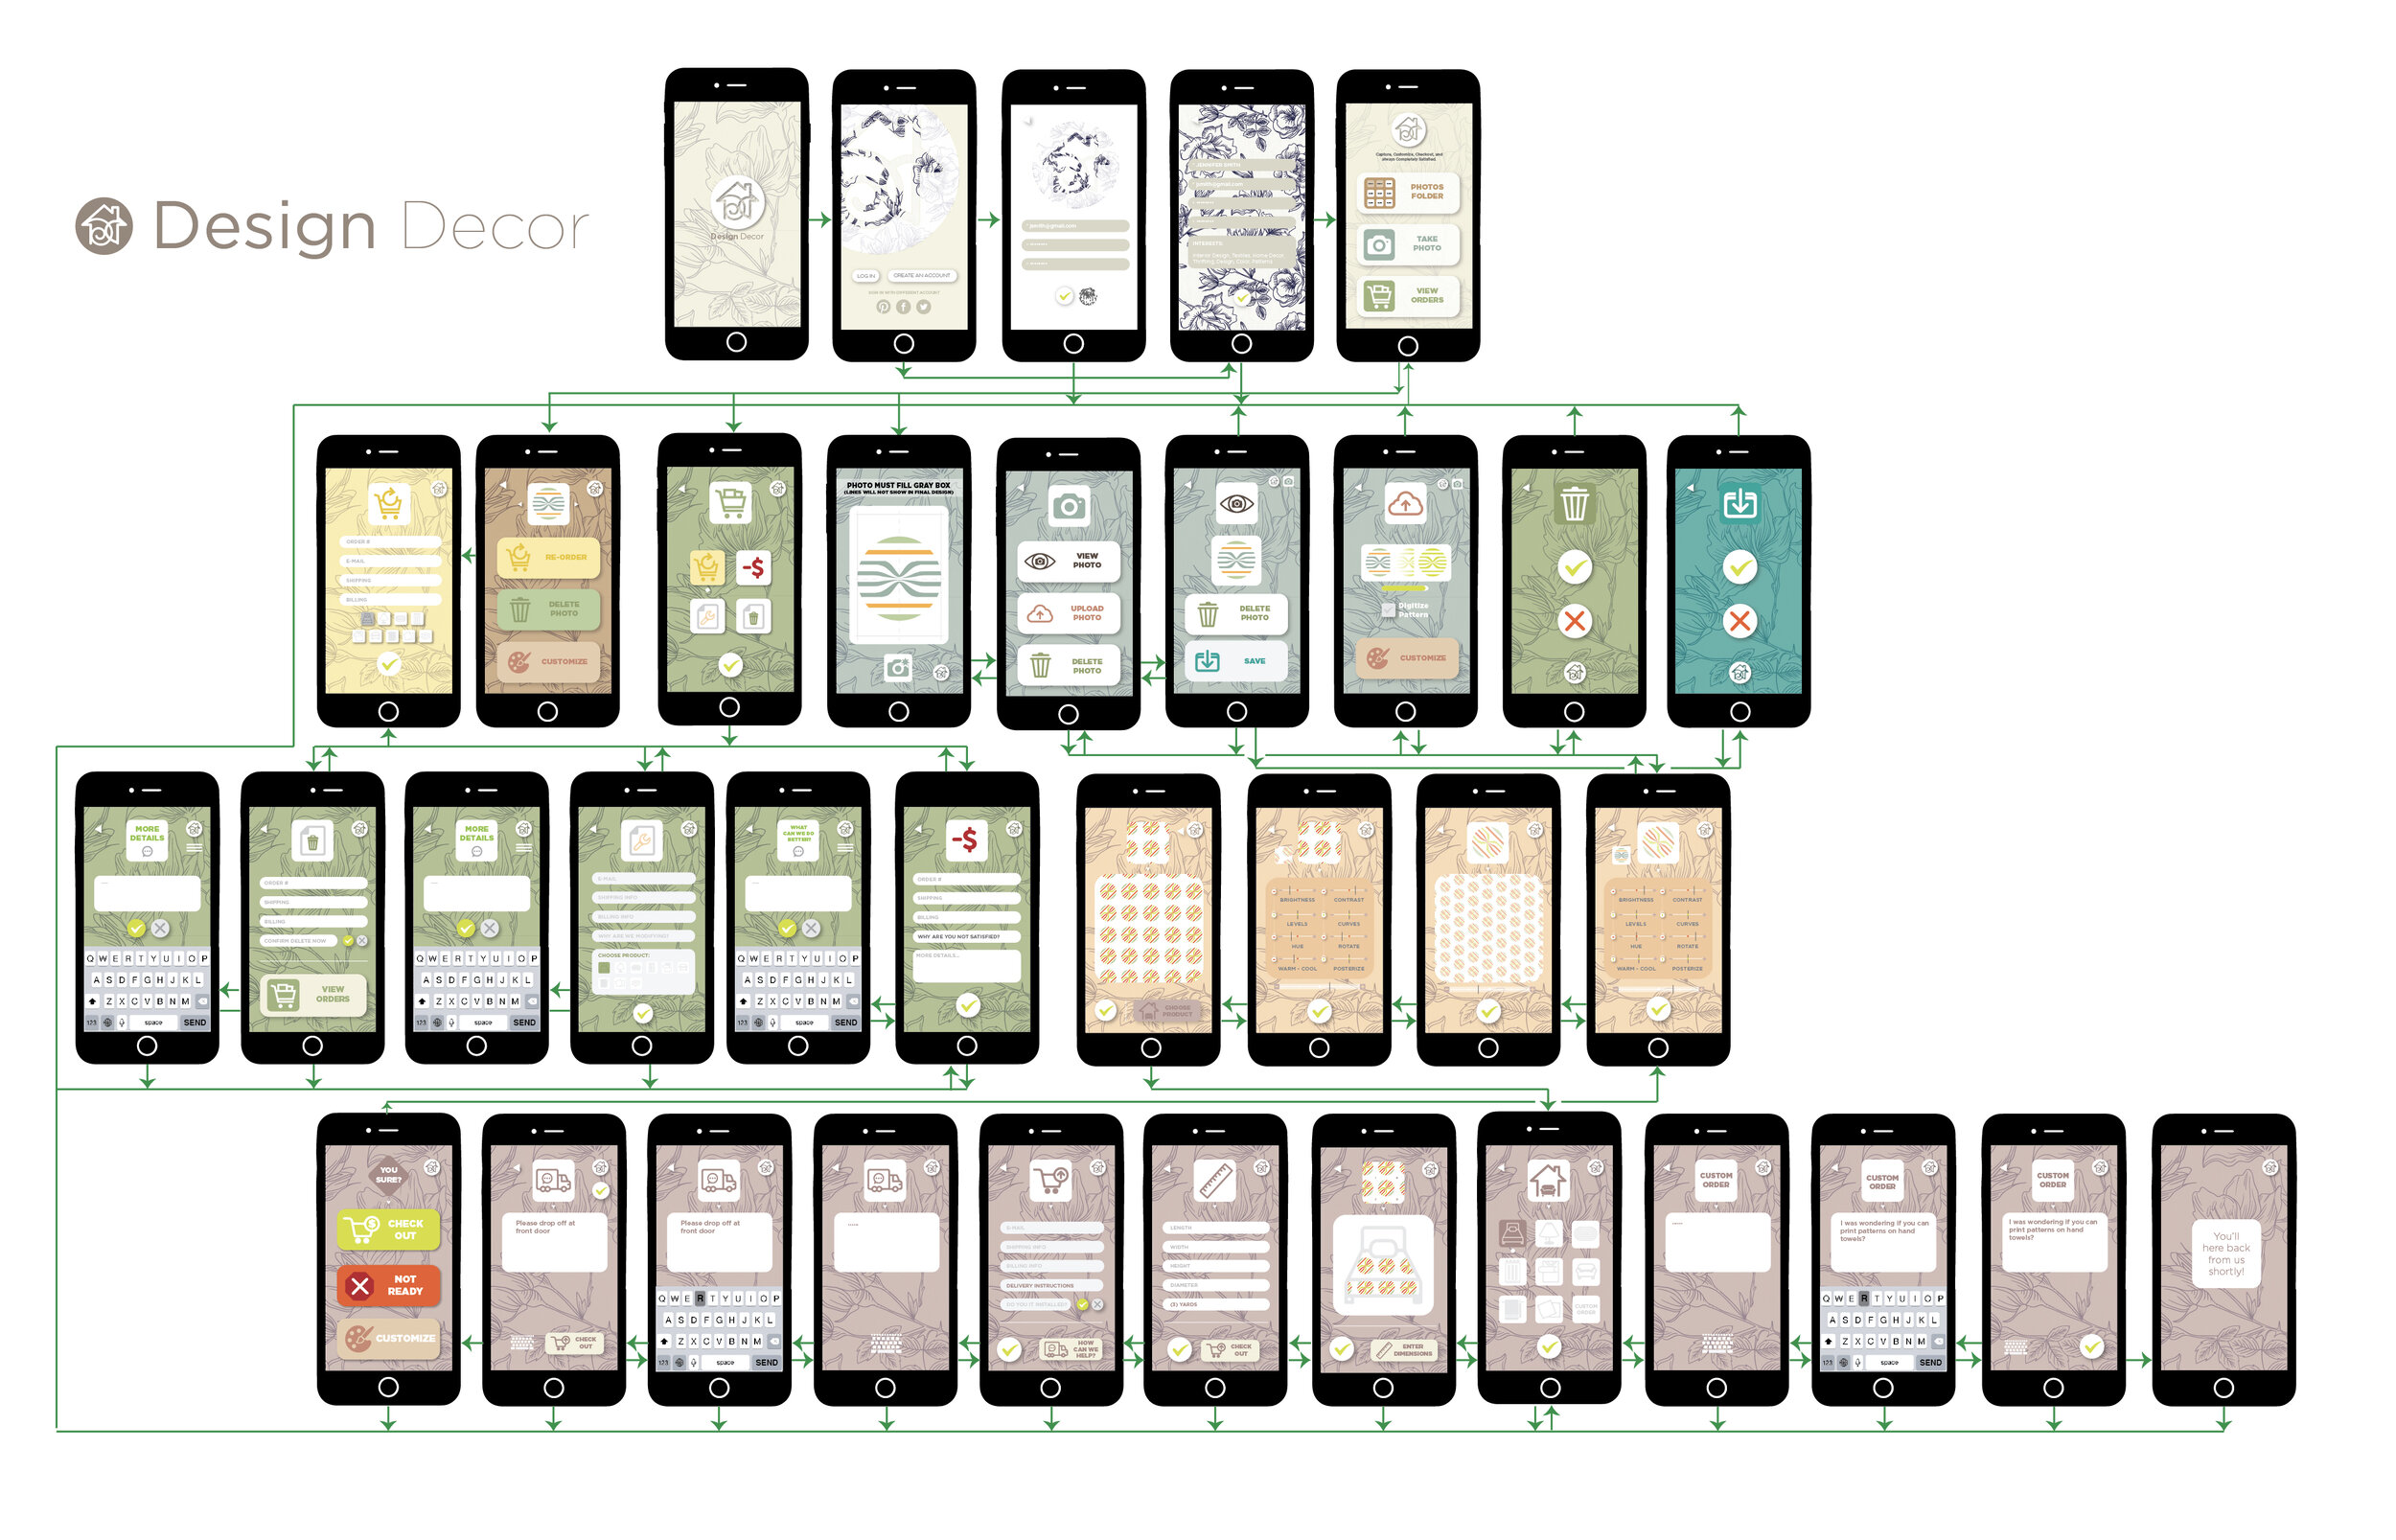 'Design Decor' Mobile App